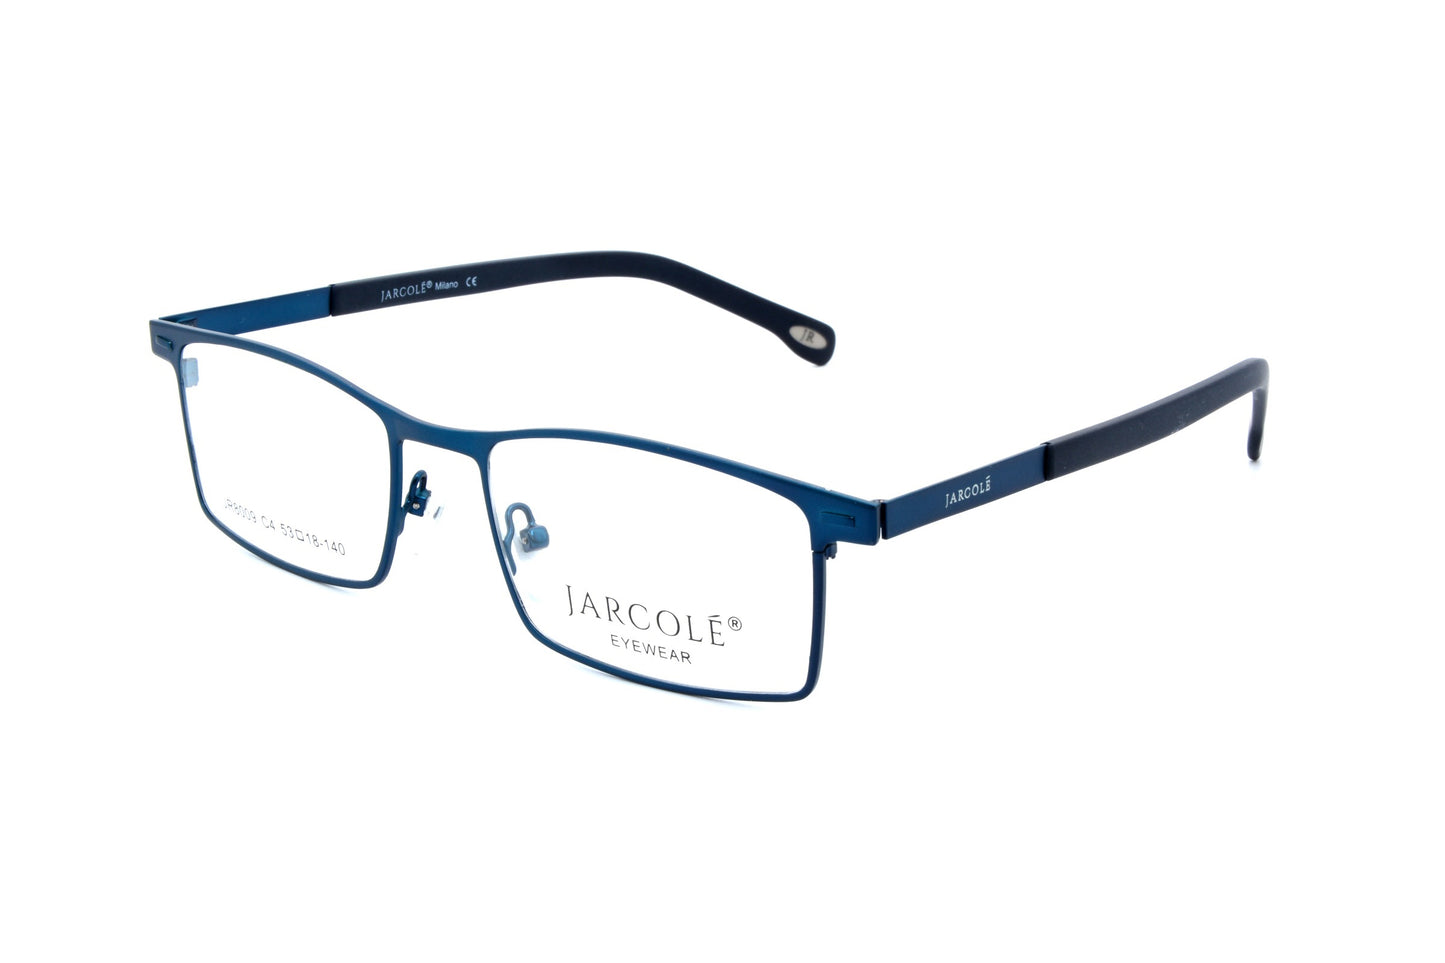 Jarcole eyewear 8009, C4 - Optics Trading